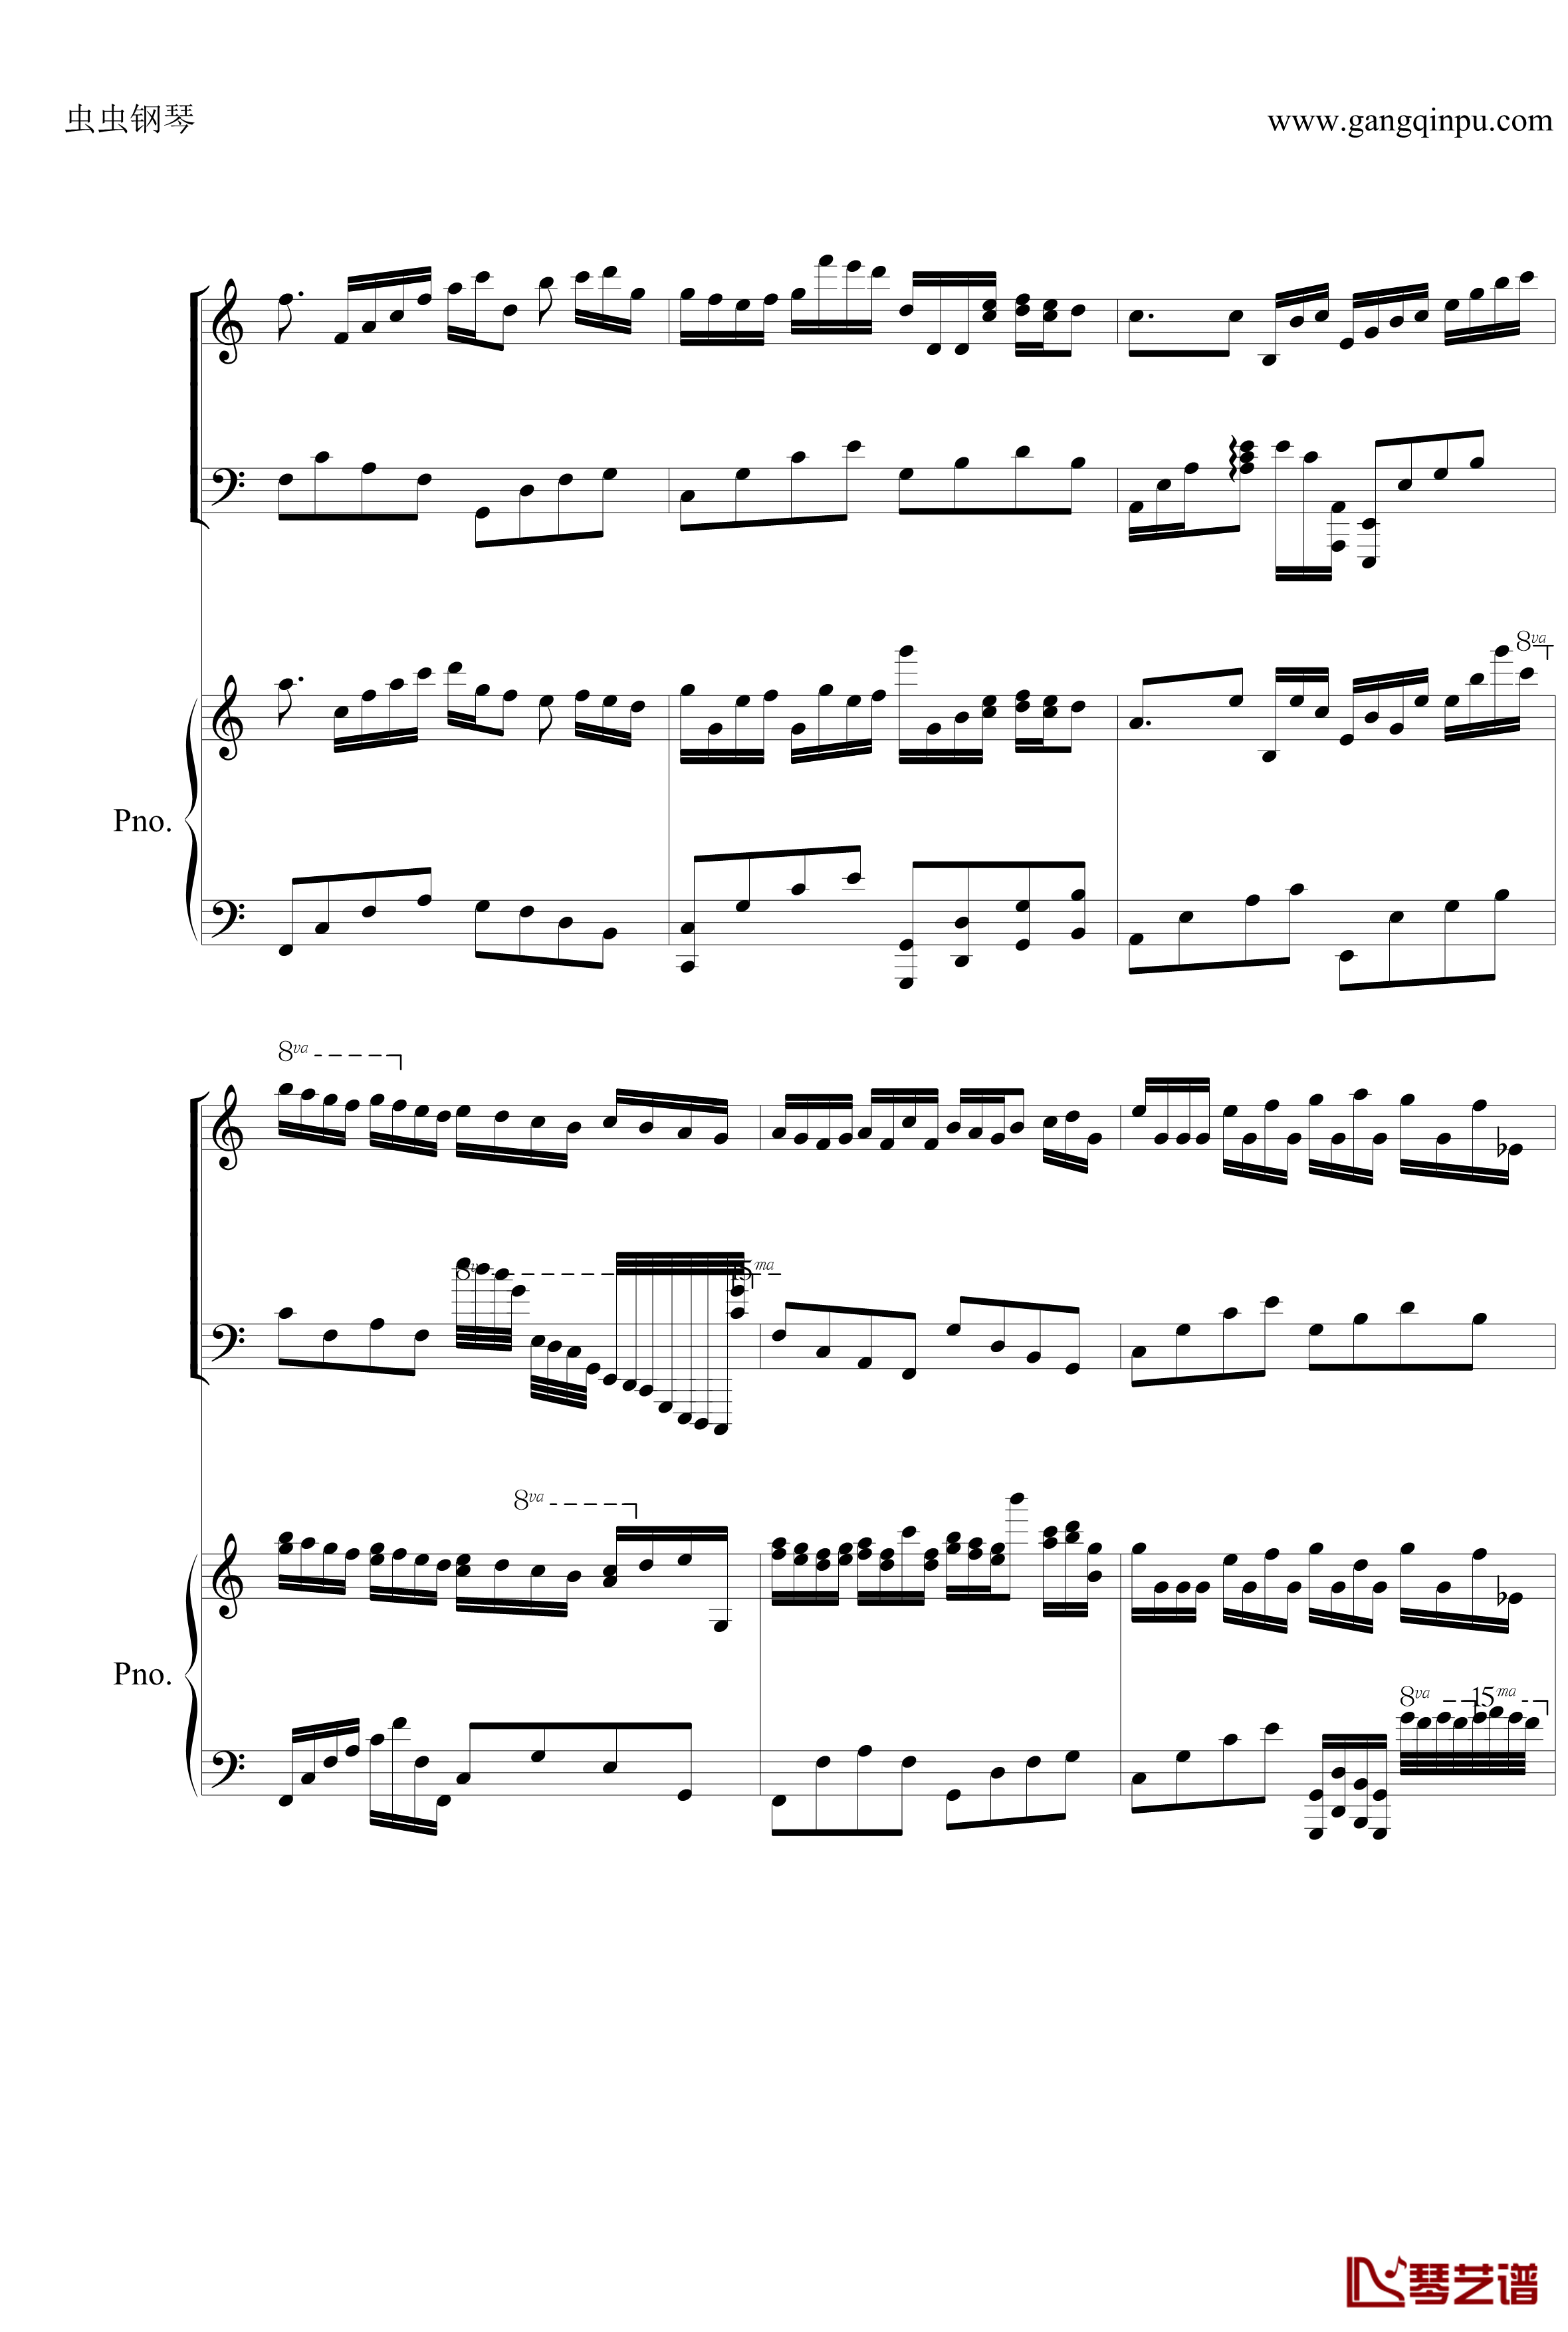 Canon双钢琴钢琴谱-仅供消遣-帕赫贝尔-Pachelbel8